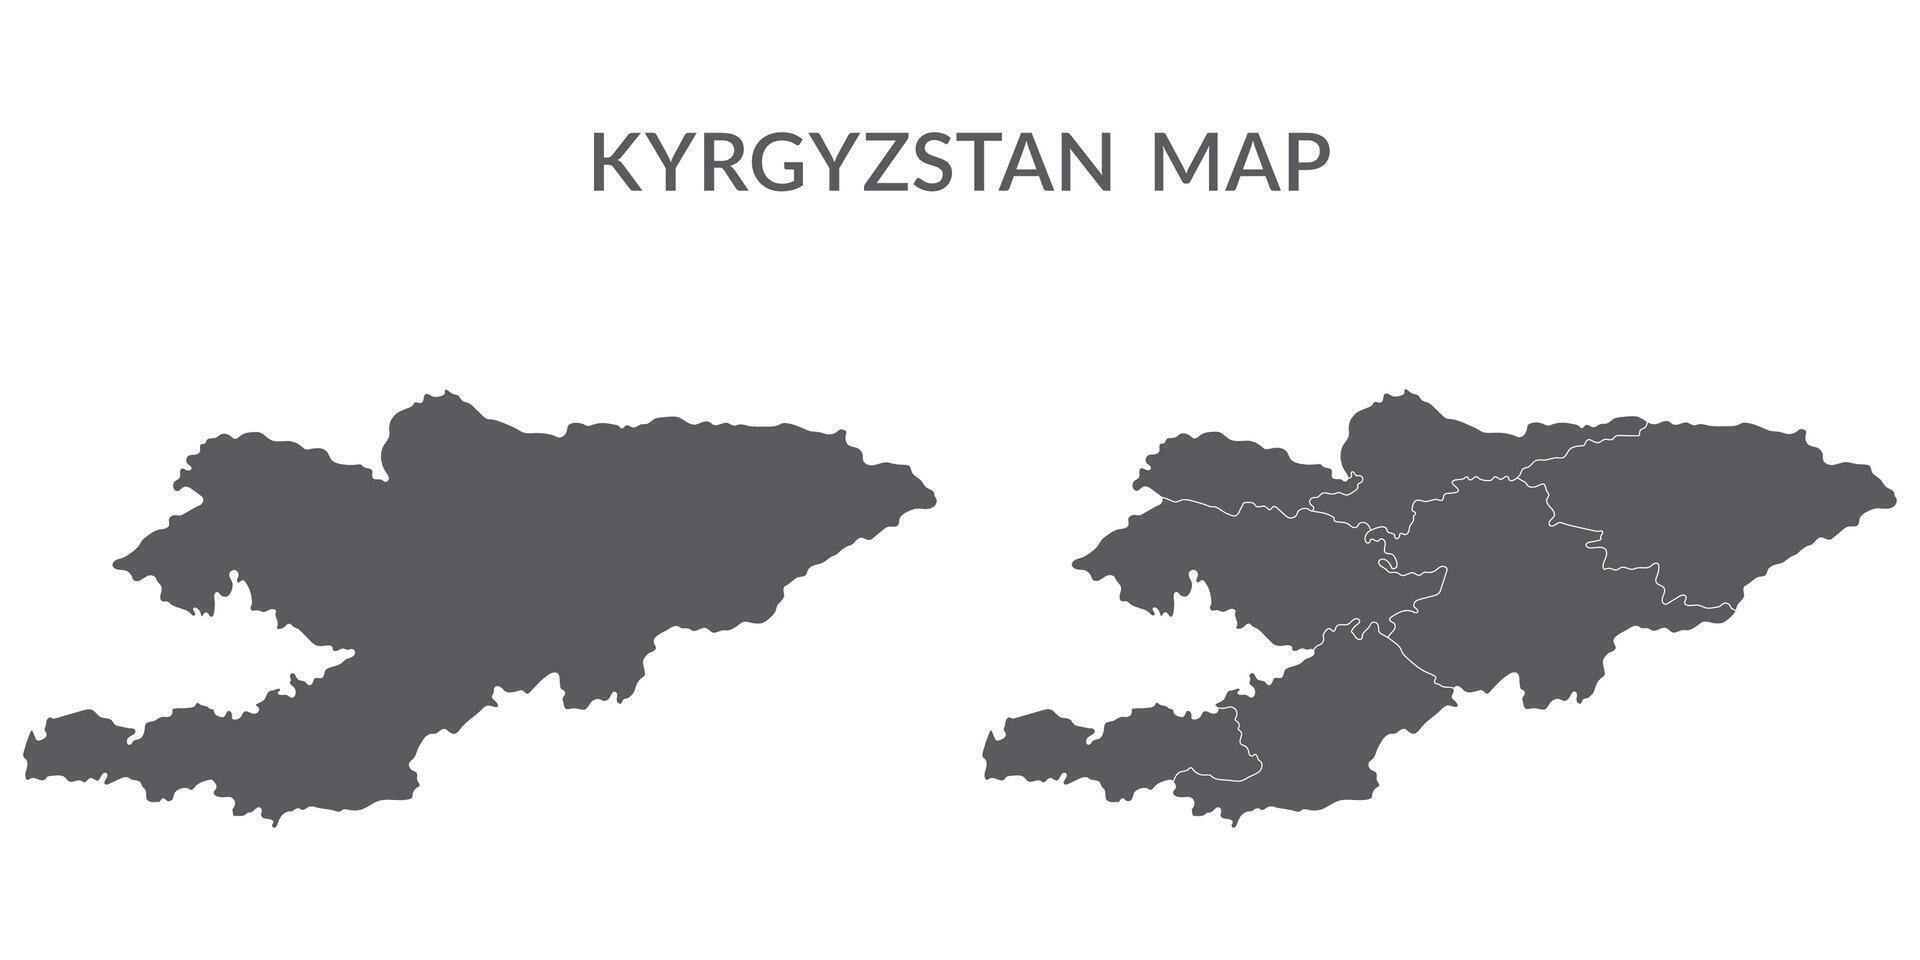 Kyrgyzstan carta geografica. carta geografica di Kyrgyzstan nel grigio impostato vettore